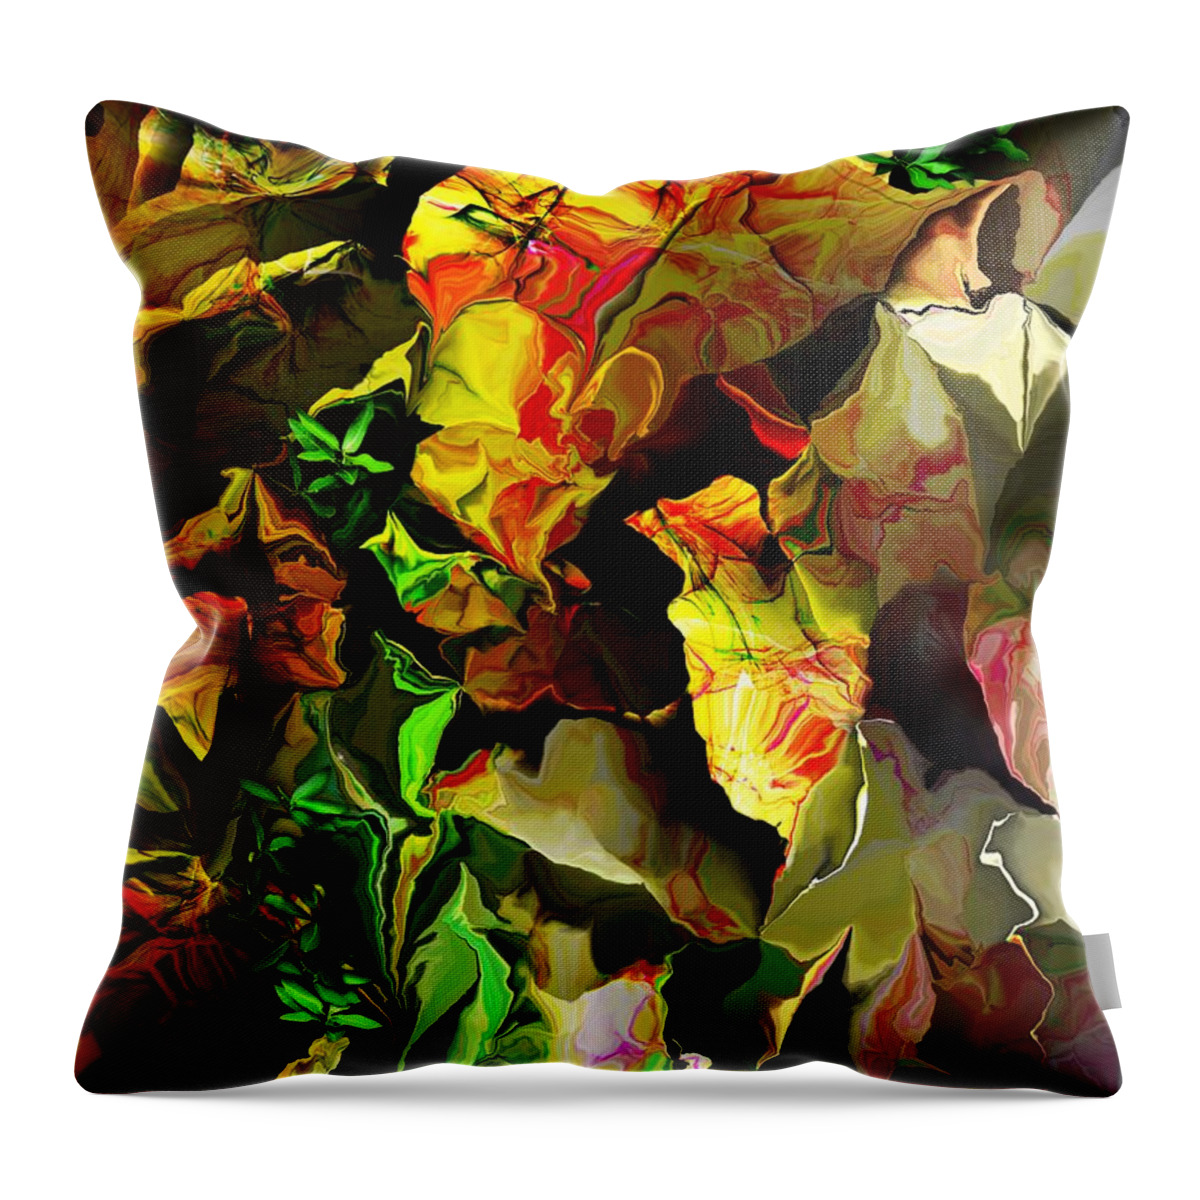 Fine Art Throw Pillow featuring the digital art Floral 082114 by David Lane